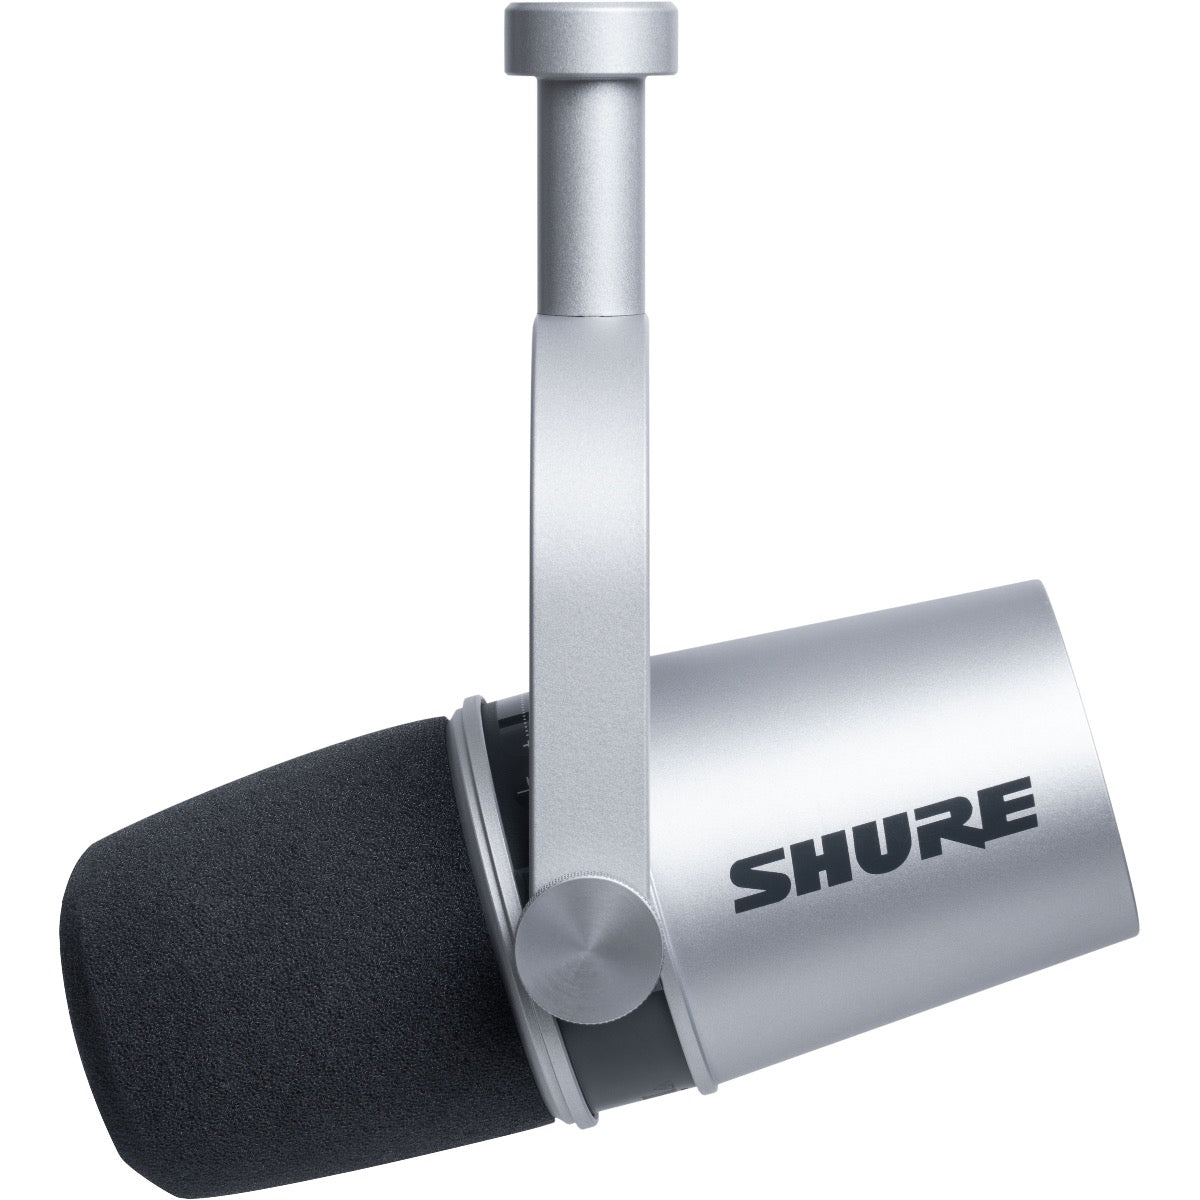 Shure MV7 Podcast Microphone - Silver